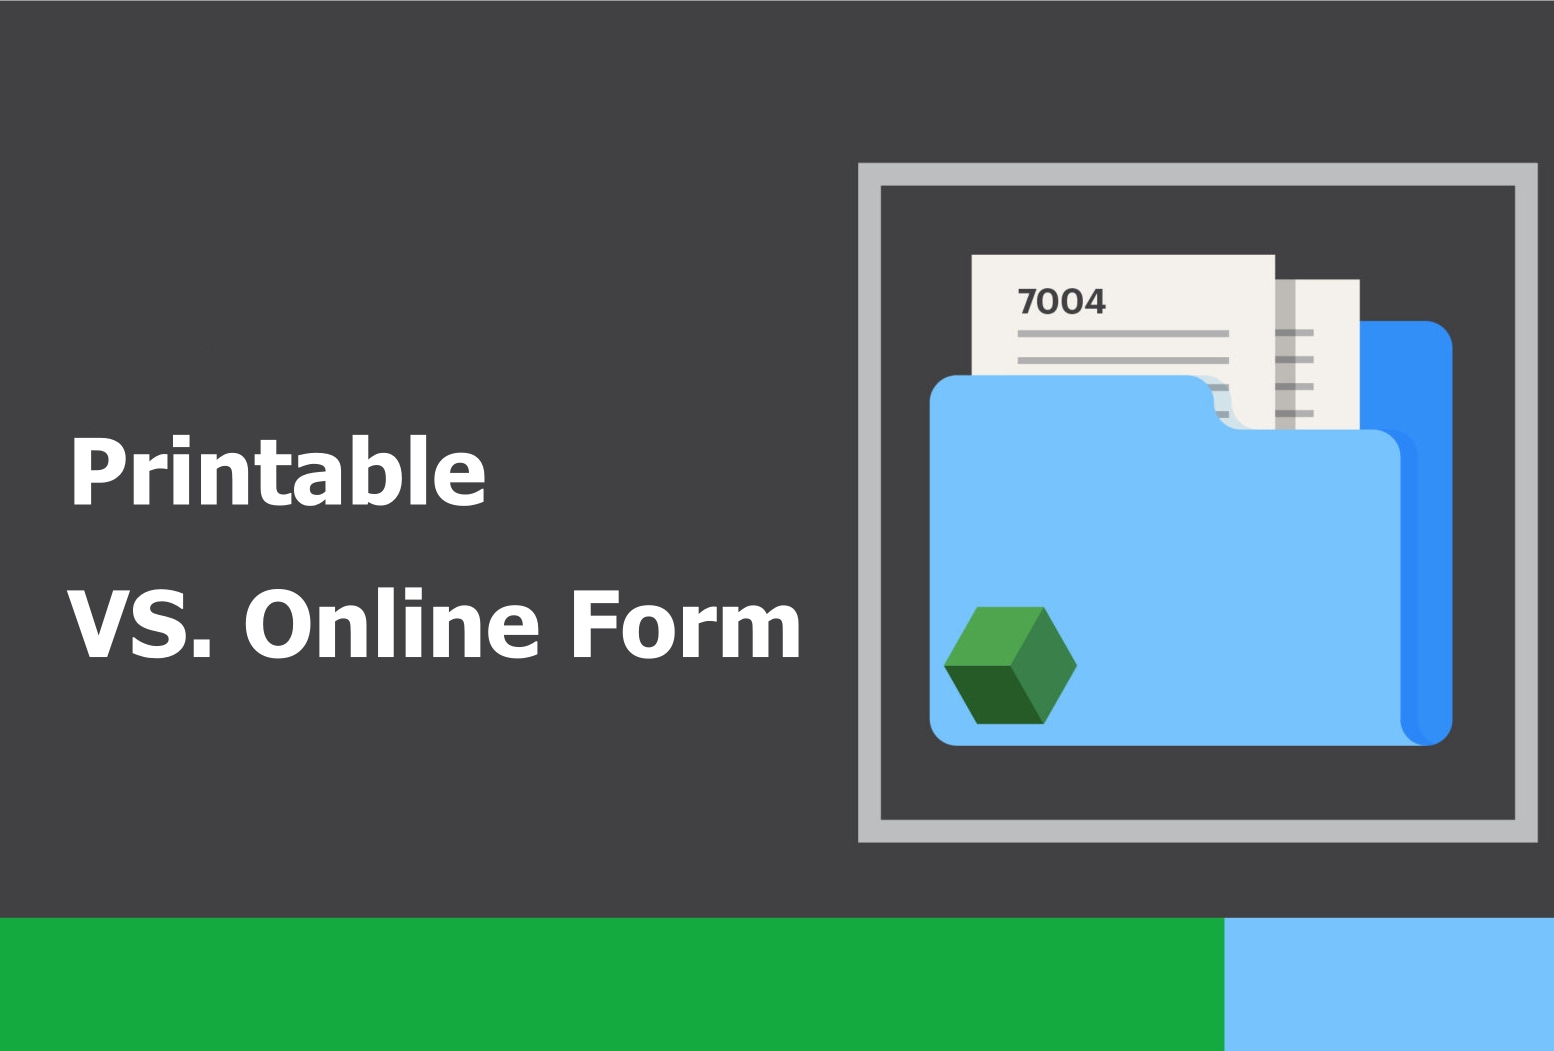 Printable VS. Online Form